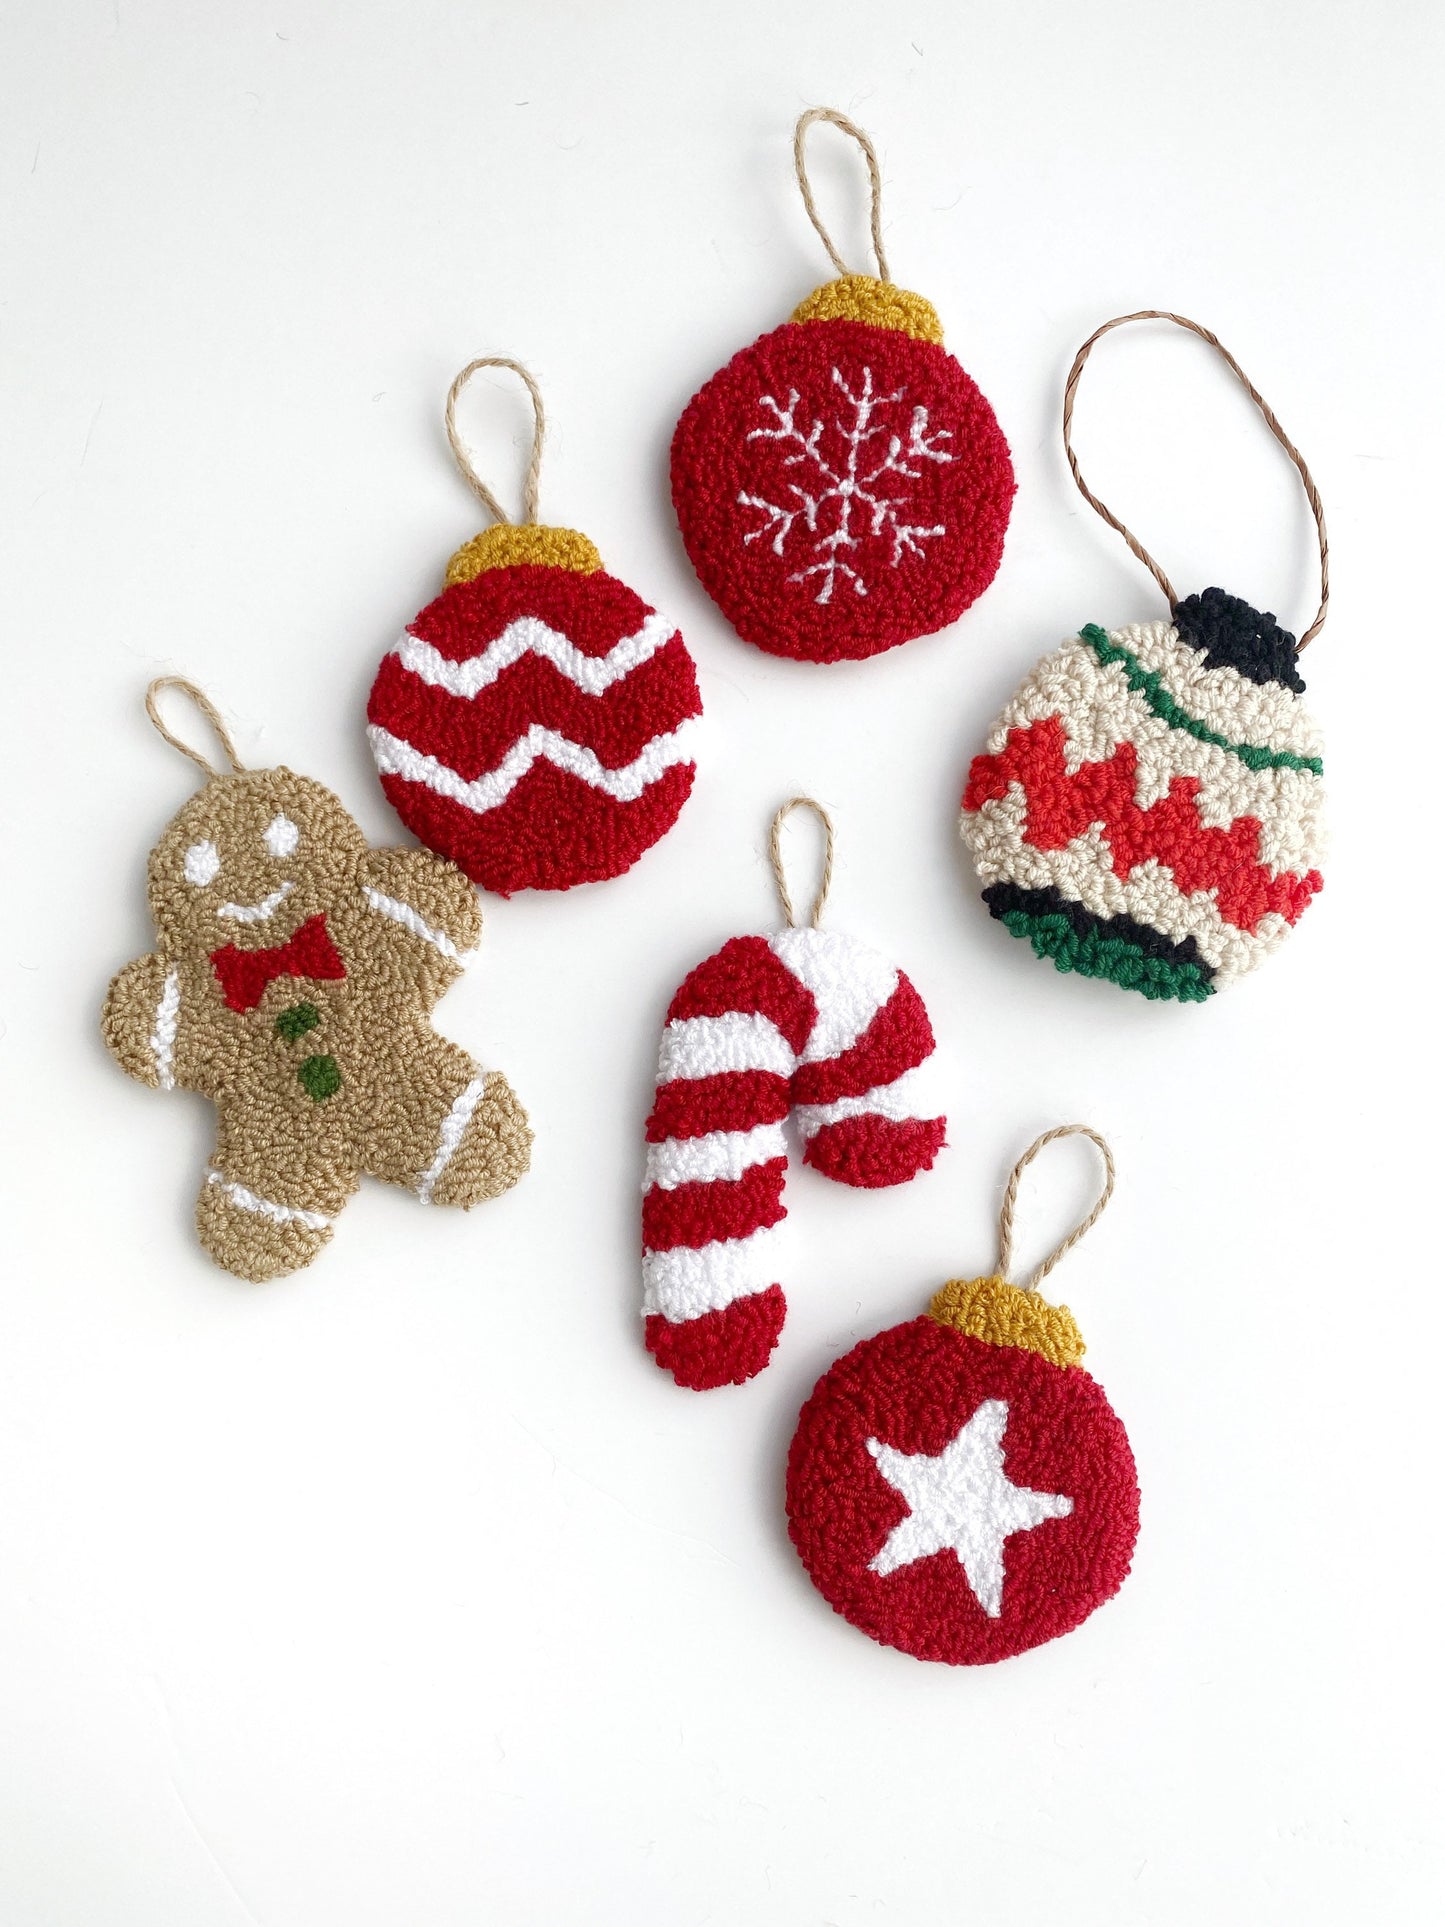 Tufted Christmas Tree Ornaments,Merry Xmas Pendants,Christmas Tree Accents,Christmas Spirit Interior,Xmas Tree Toppings Hanging Jingle Bell